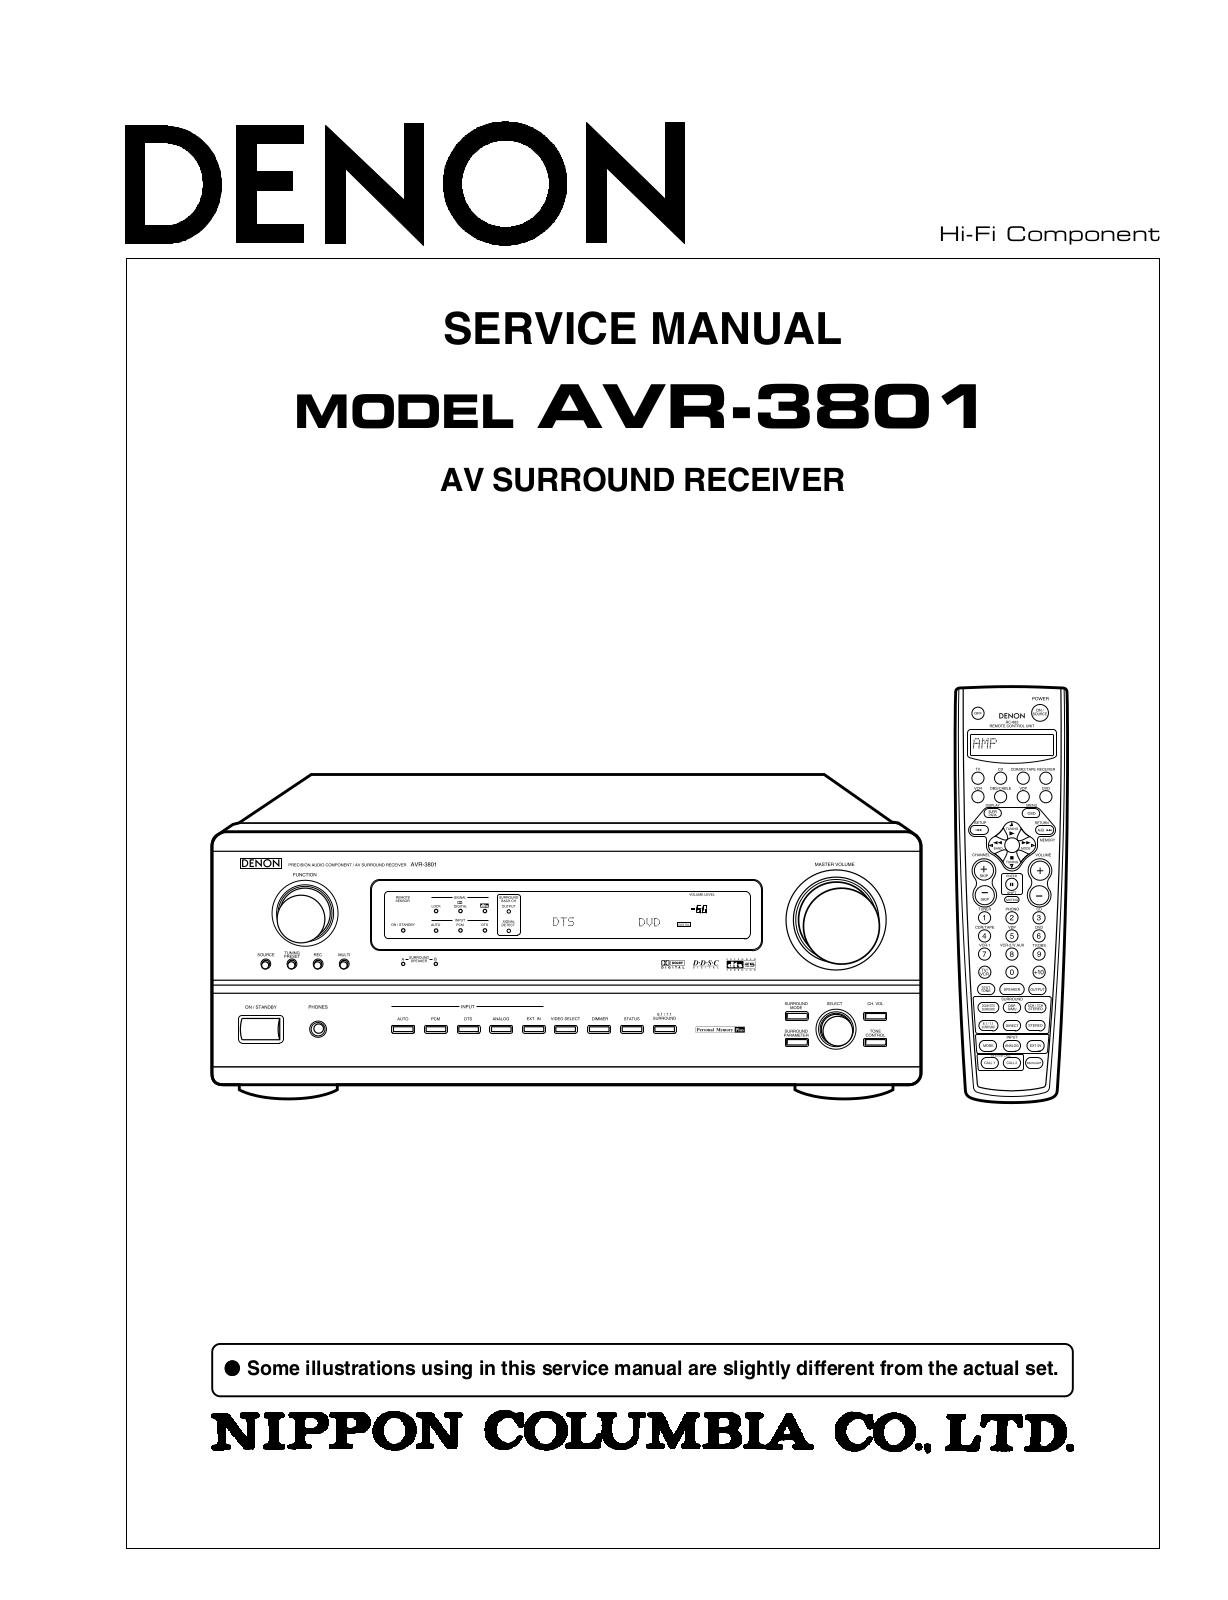 Denon AVR-3801 Service Manual